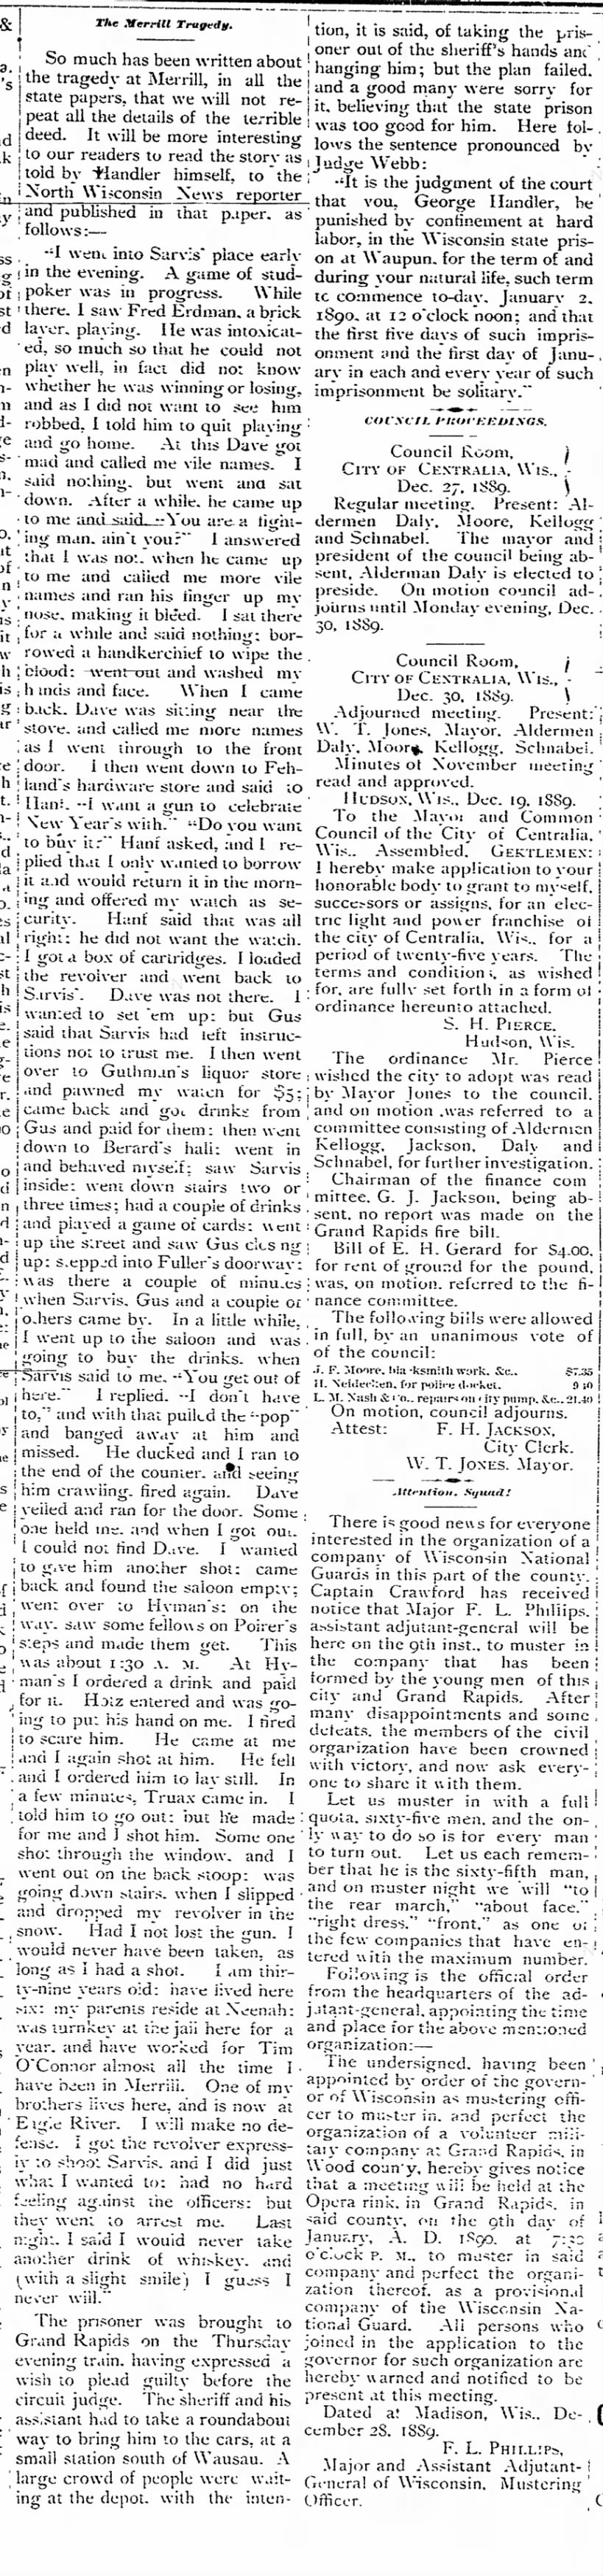 George Handler - Centralia Enterprise and Tribune - 4 Jan 1890